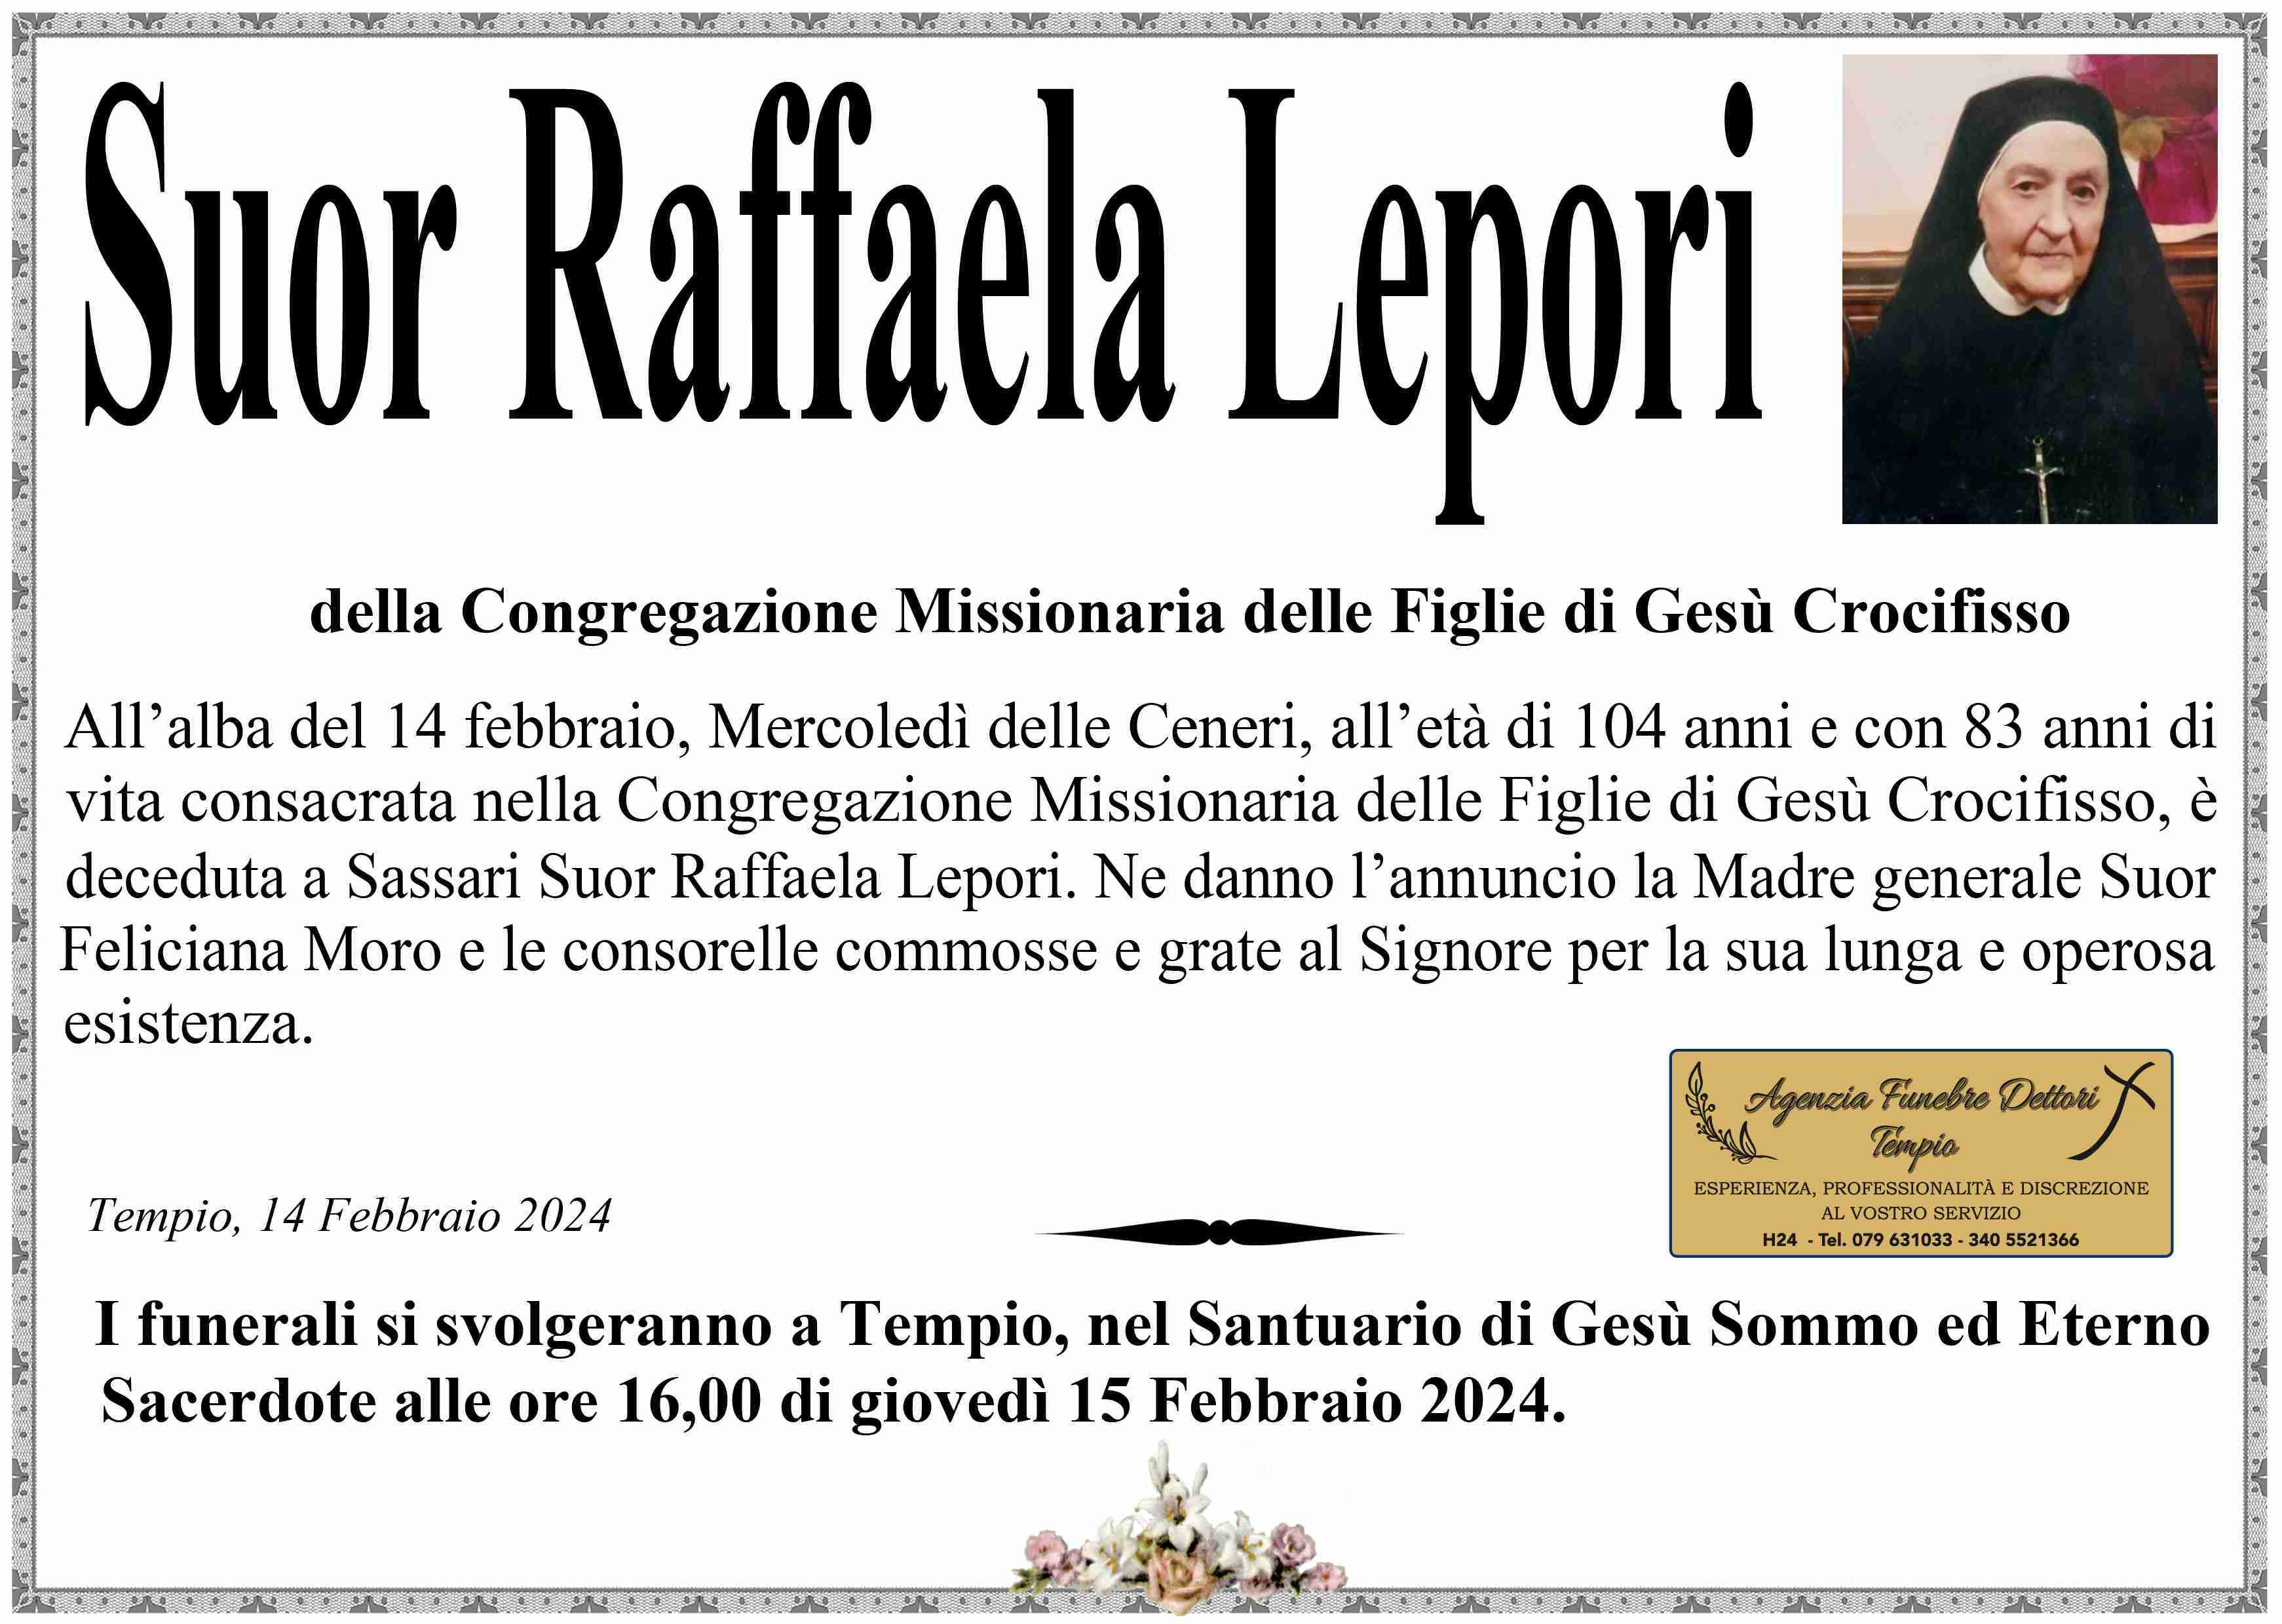 Raffaela Lepori